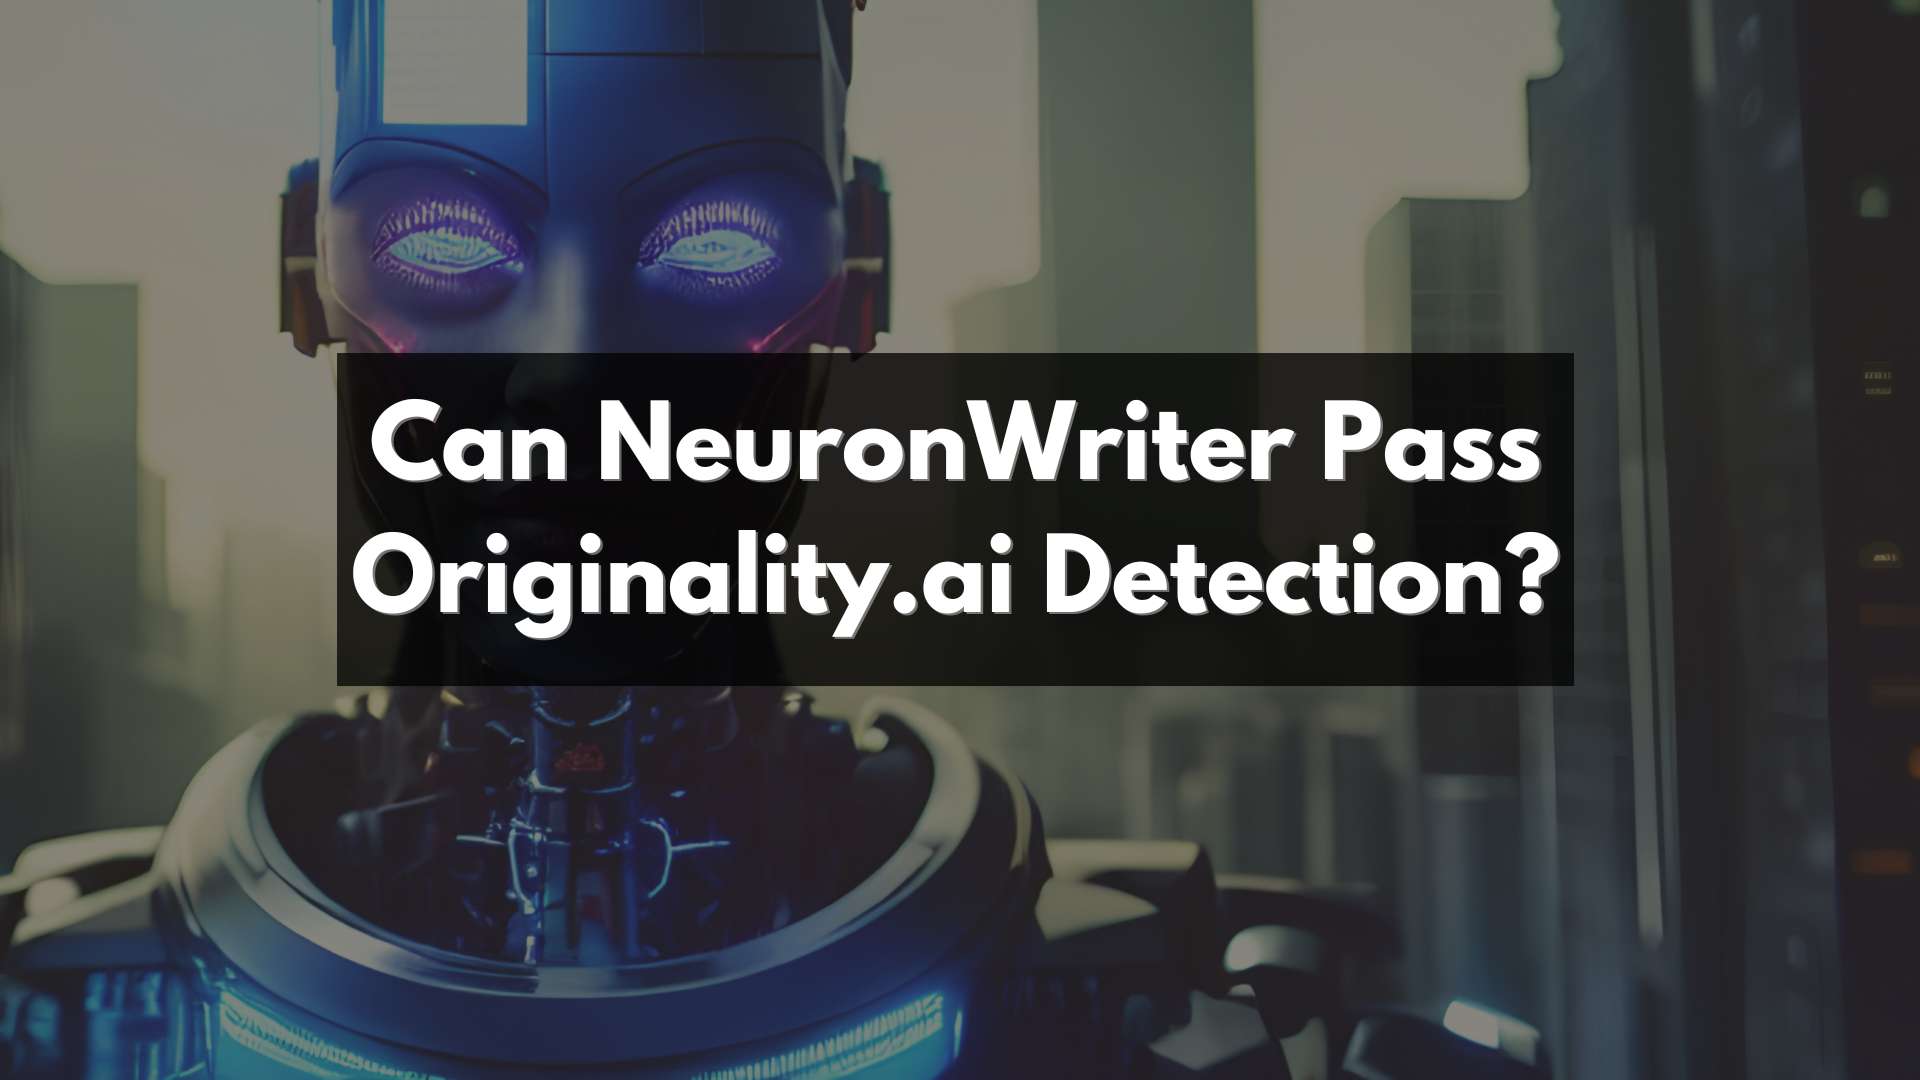 Can neuronwriter pass originality. Ai detection